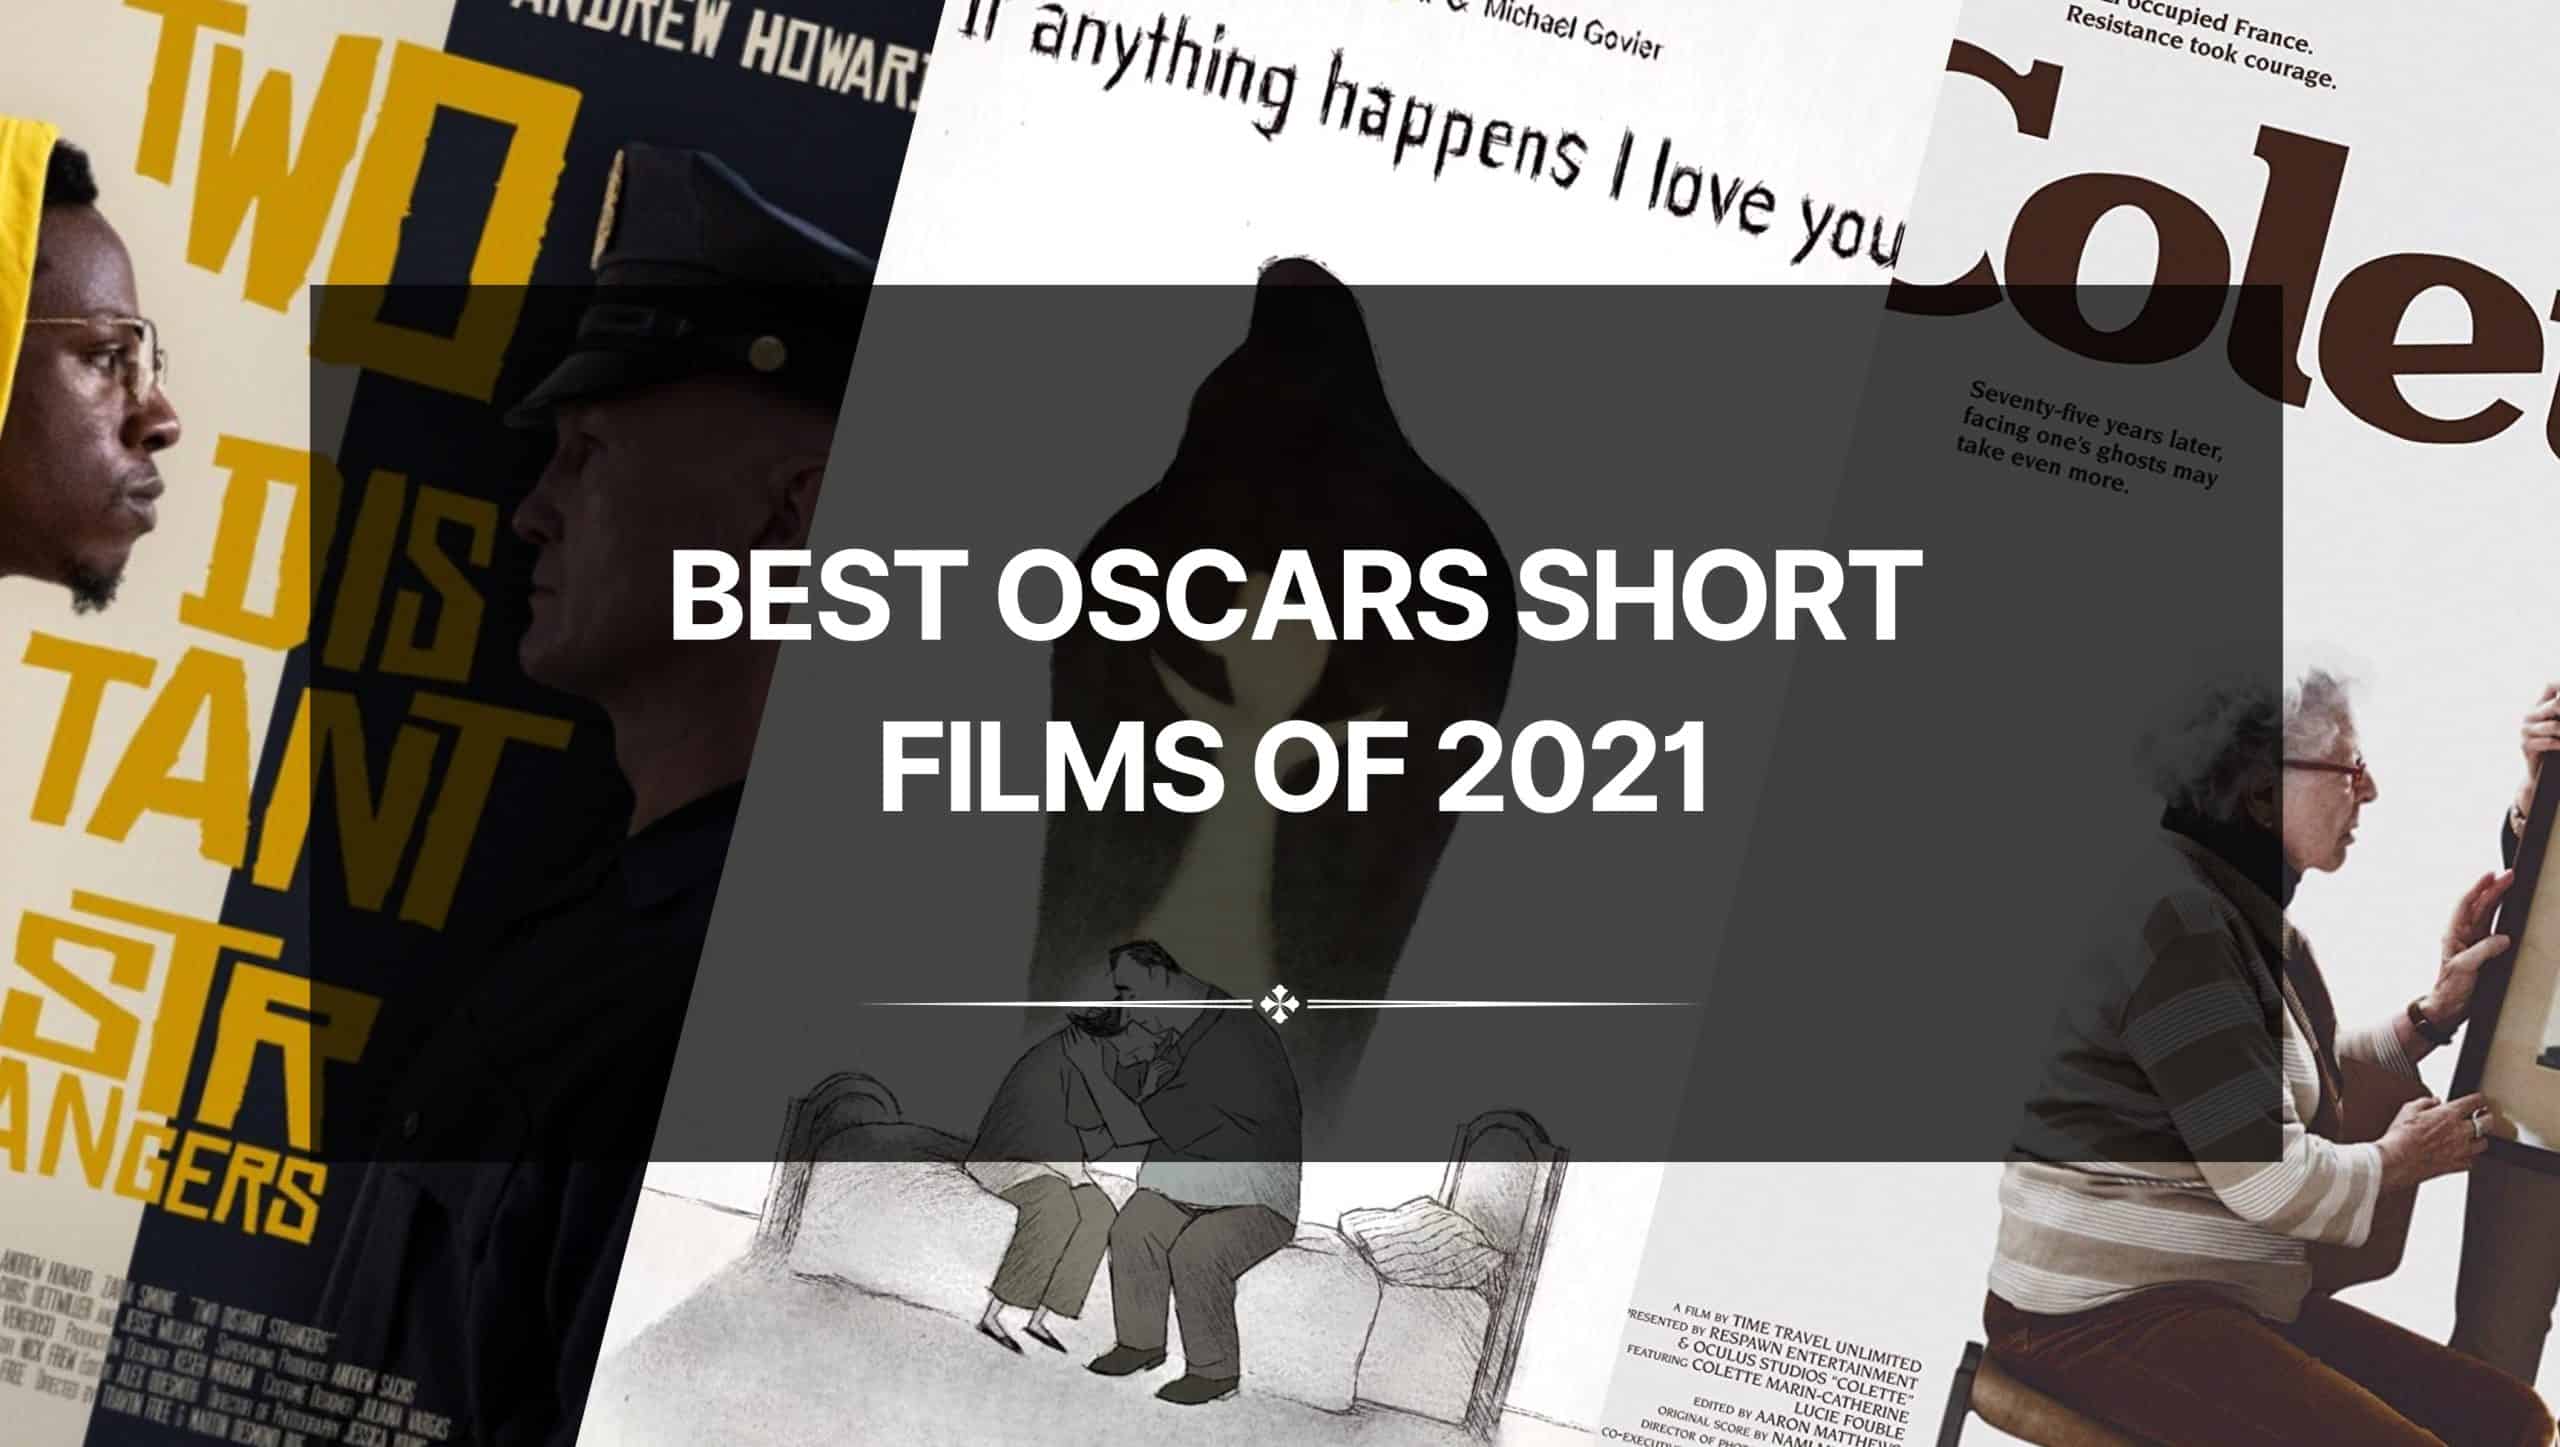 Best Oscars Short Films of 2021